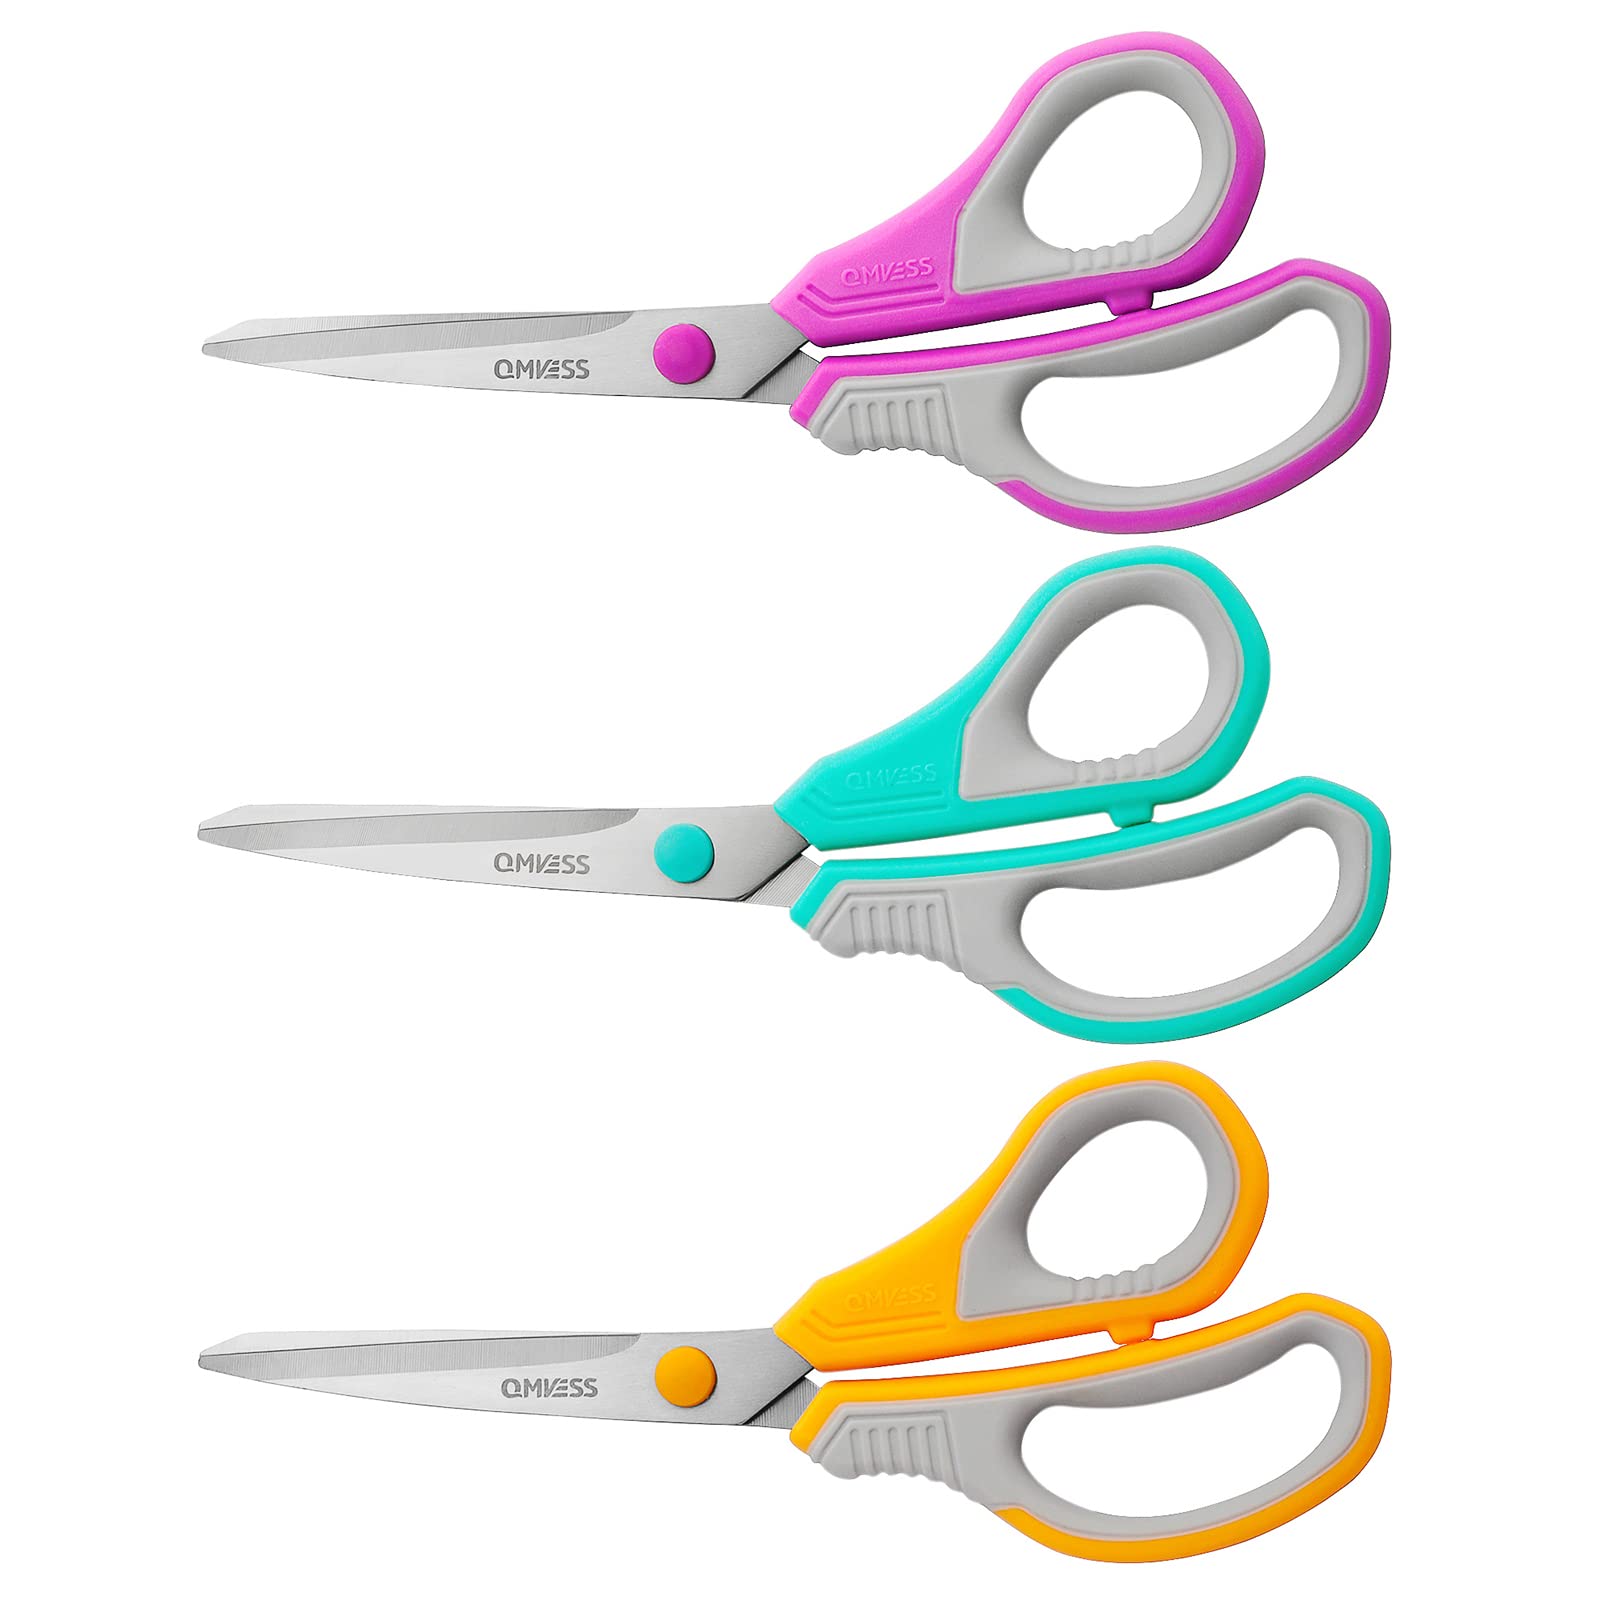 Casewin Kitchen Scissors,Heavy duty Food scissors,Multipurpose